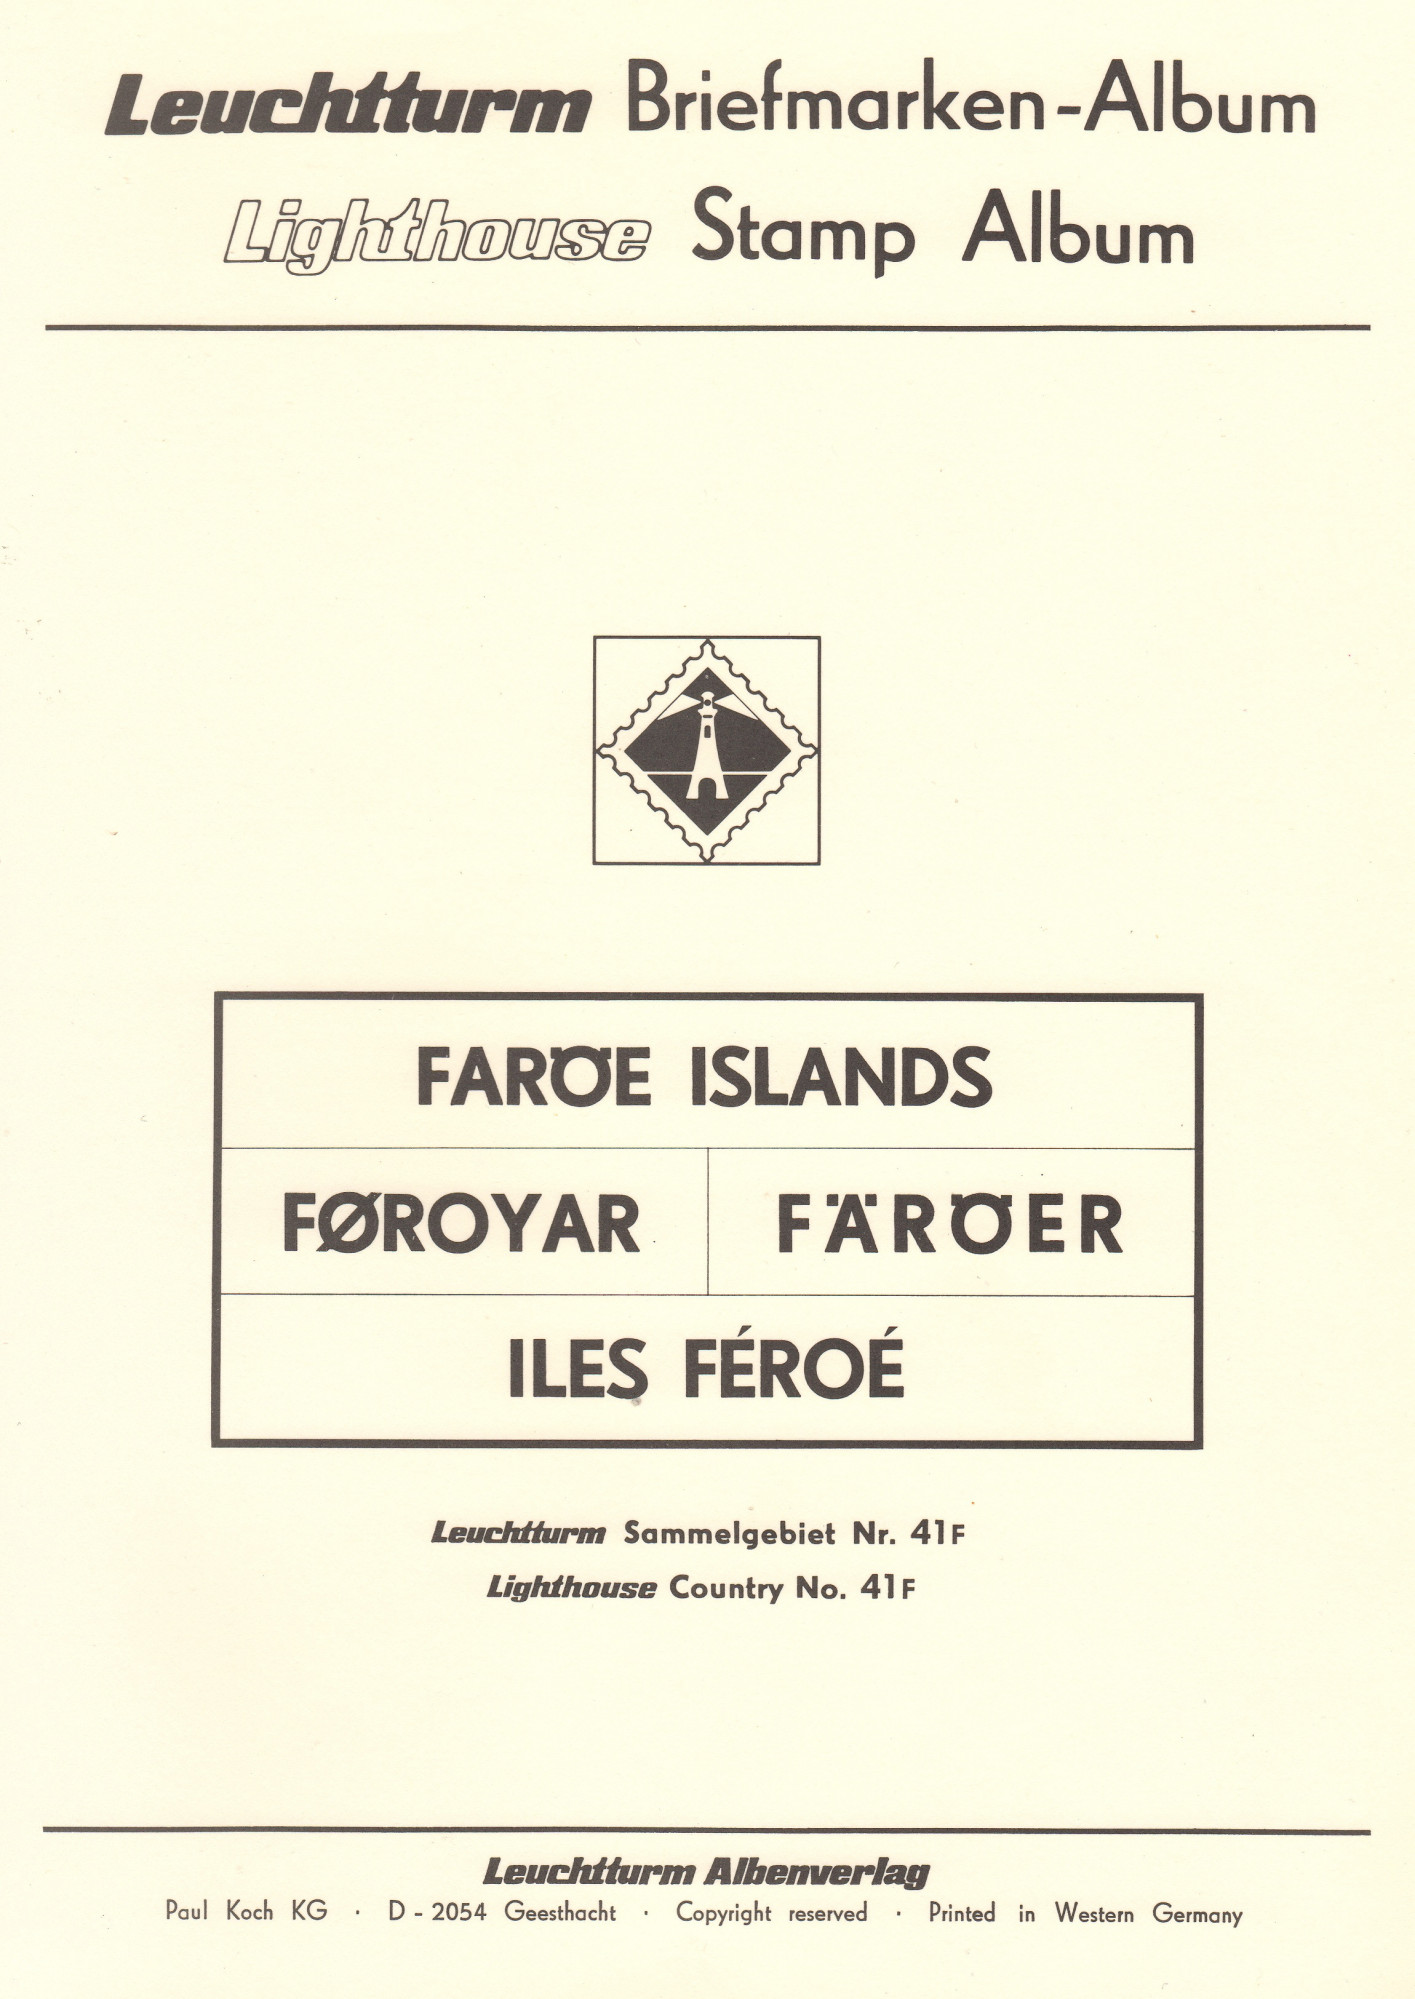 Faroe Islands album